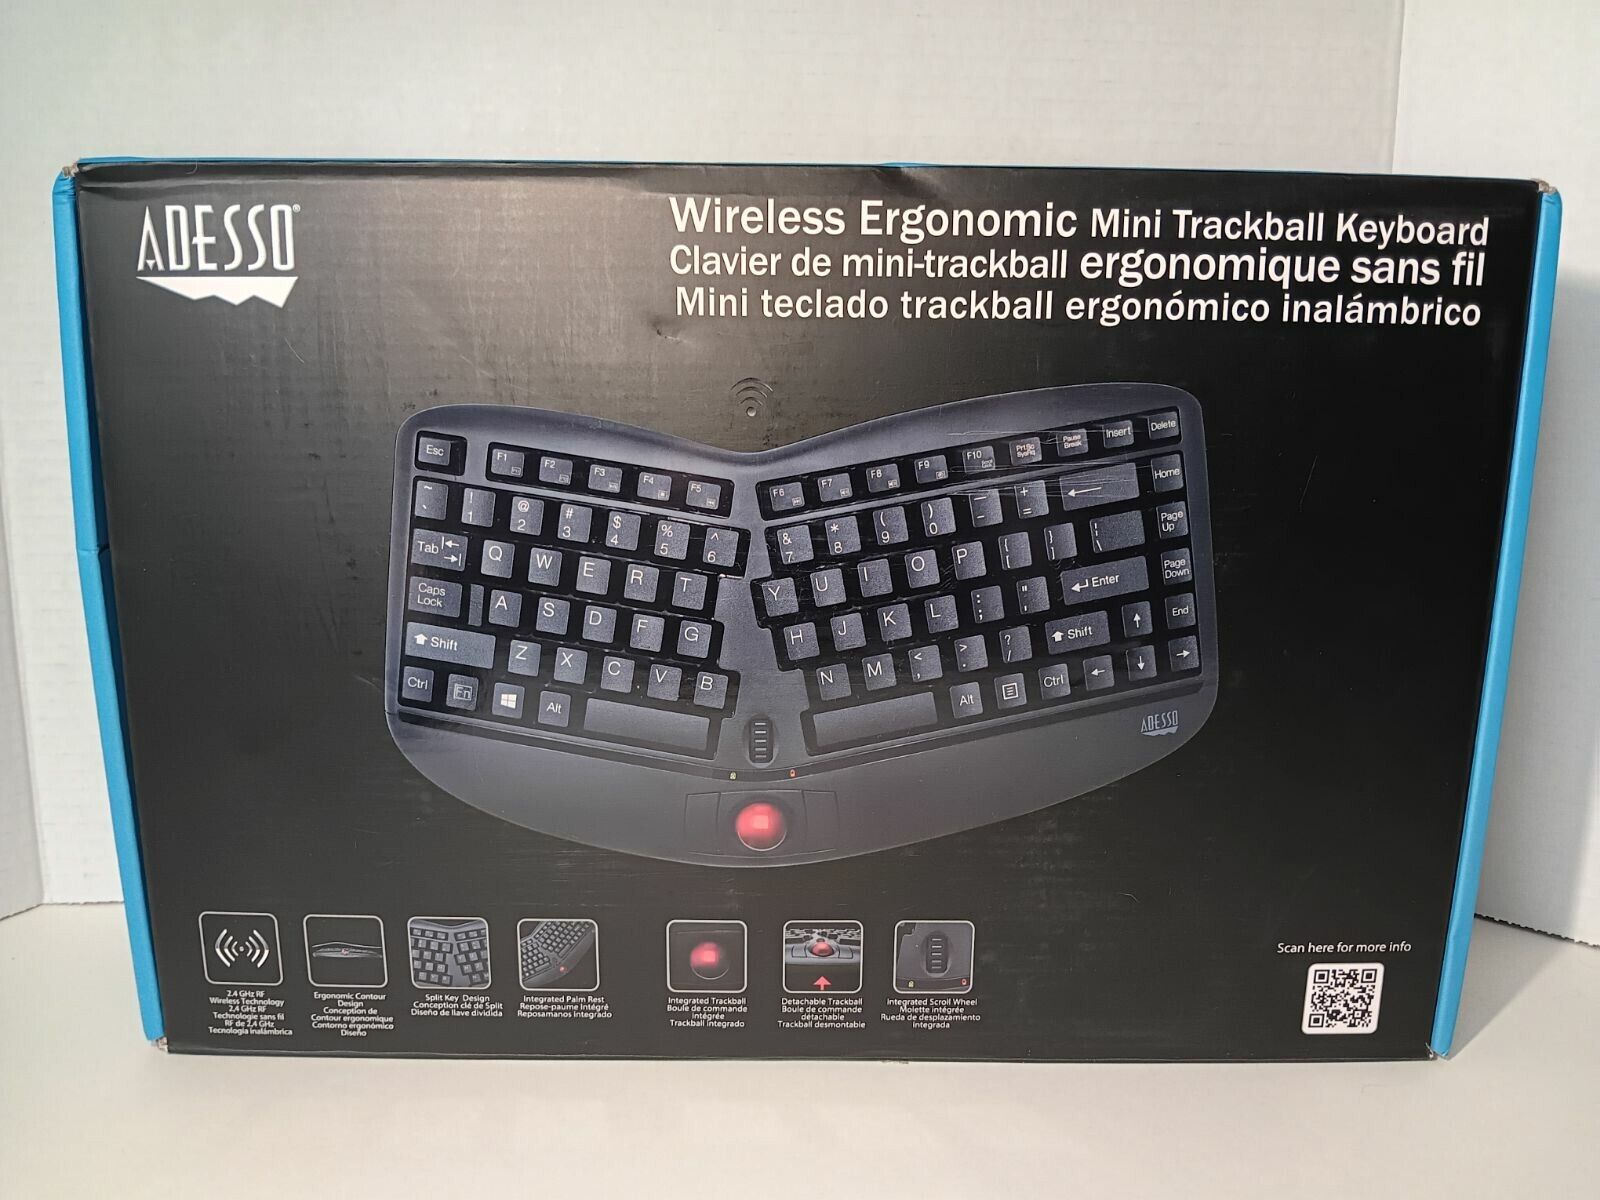 Adesso Tru-Form Media 3150 - 2.4 GHz Wireless Ergo Trackball Keyboard (open box)